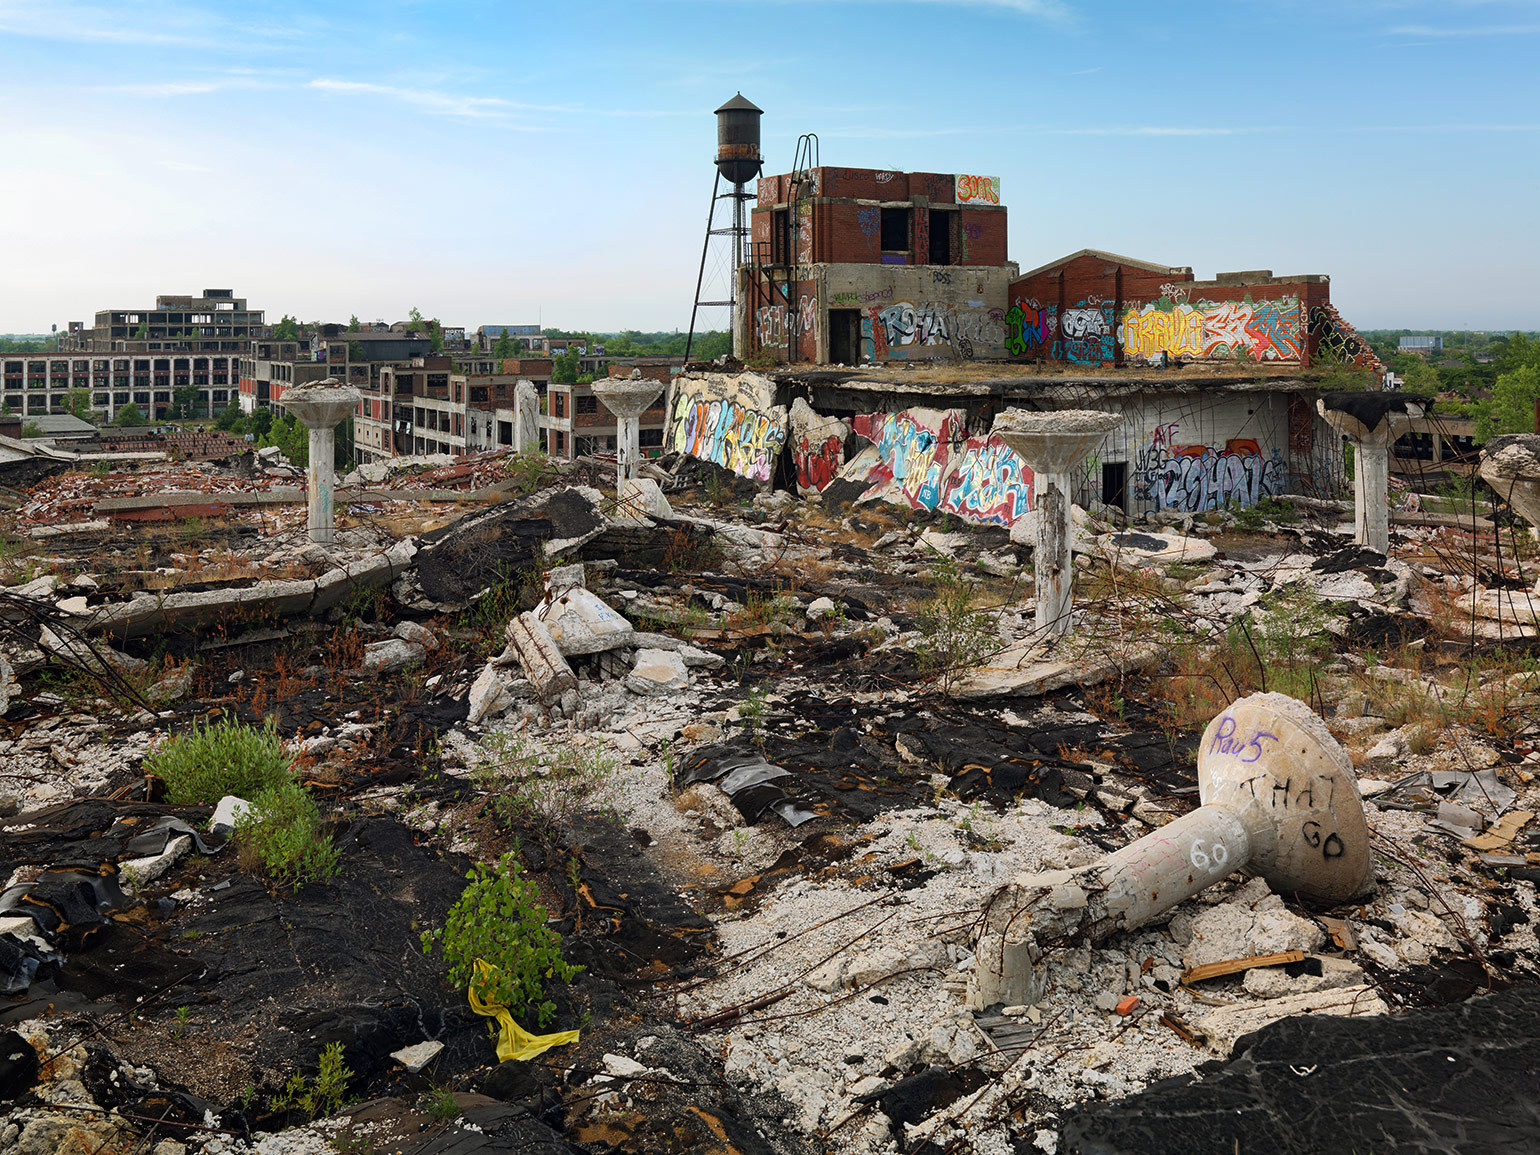 Decaying Detroit